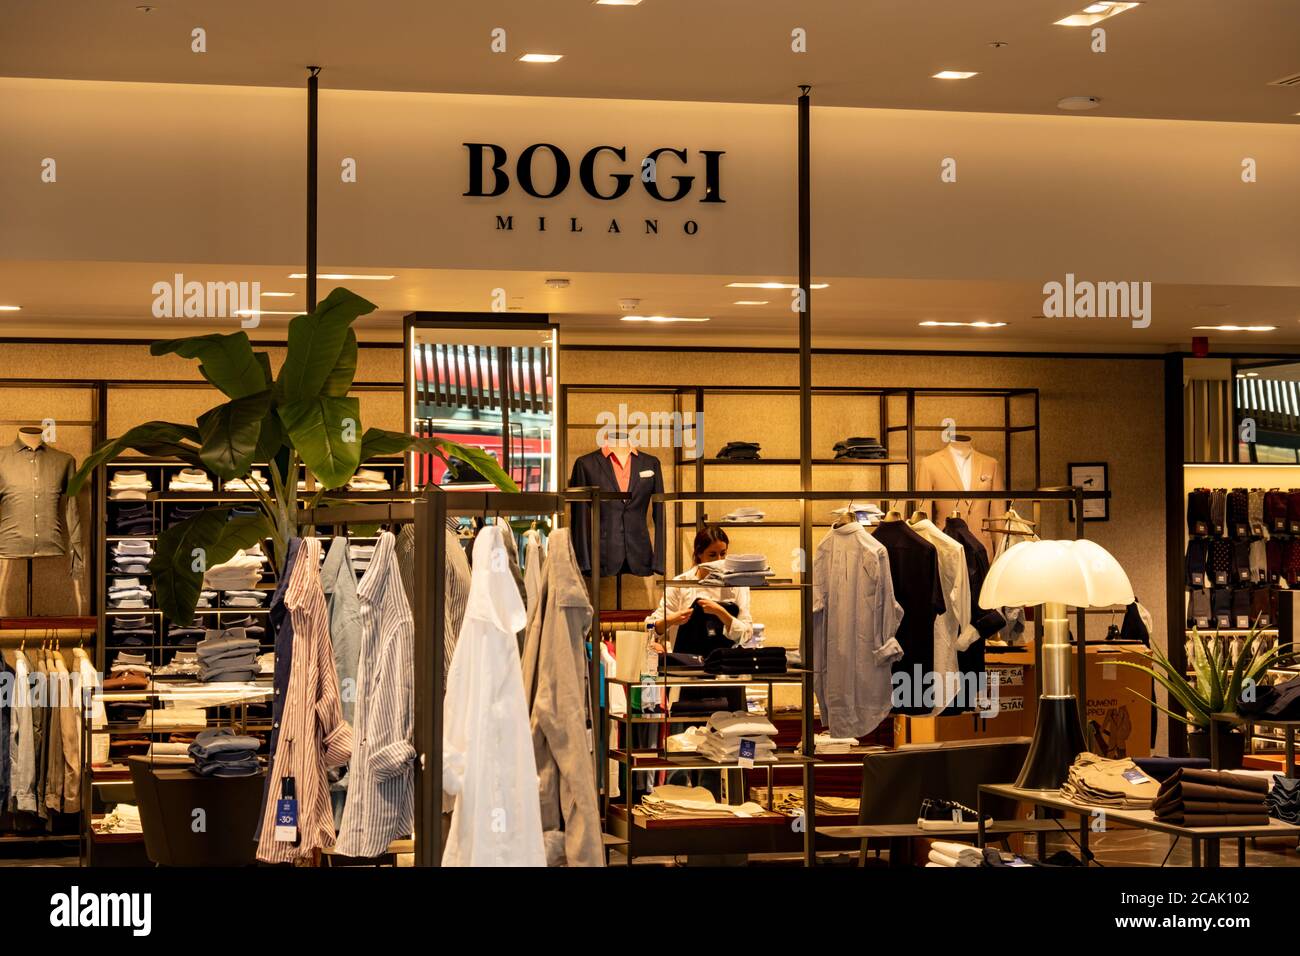 London- Boggi Milano store interior on Regent Street, an Italian fashion brand Stock Photo